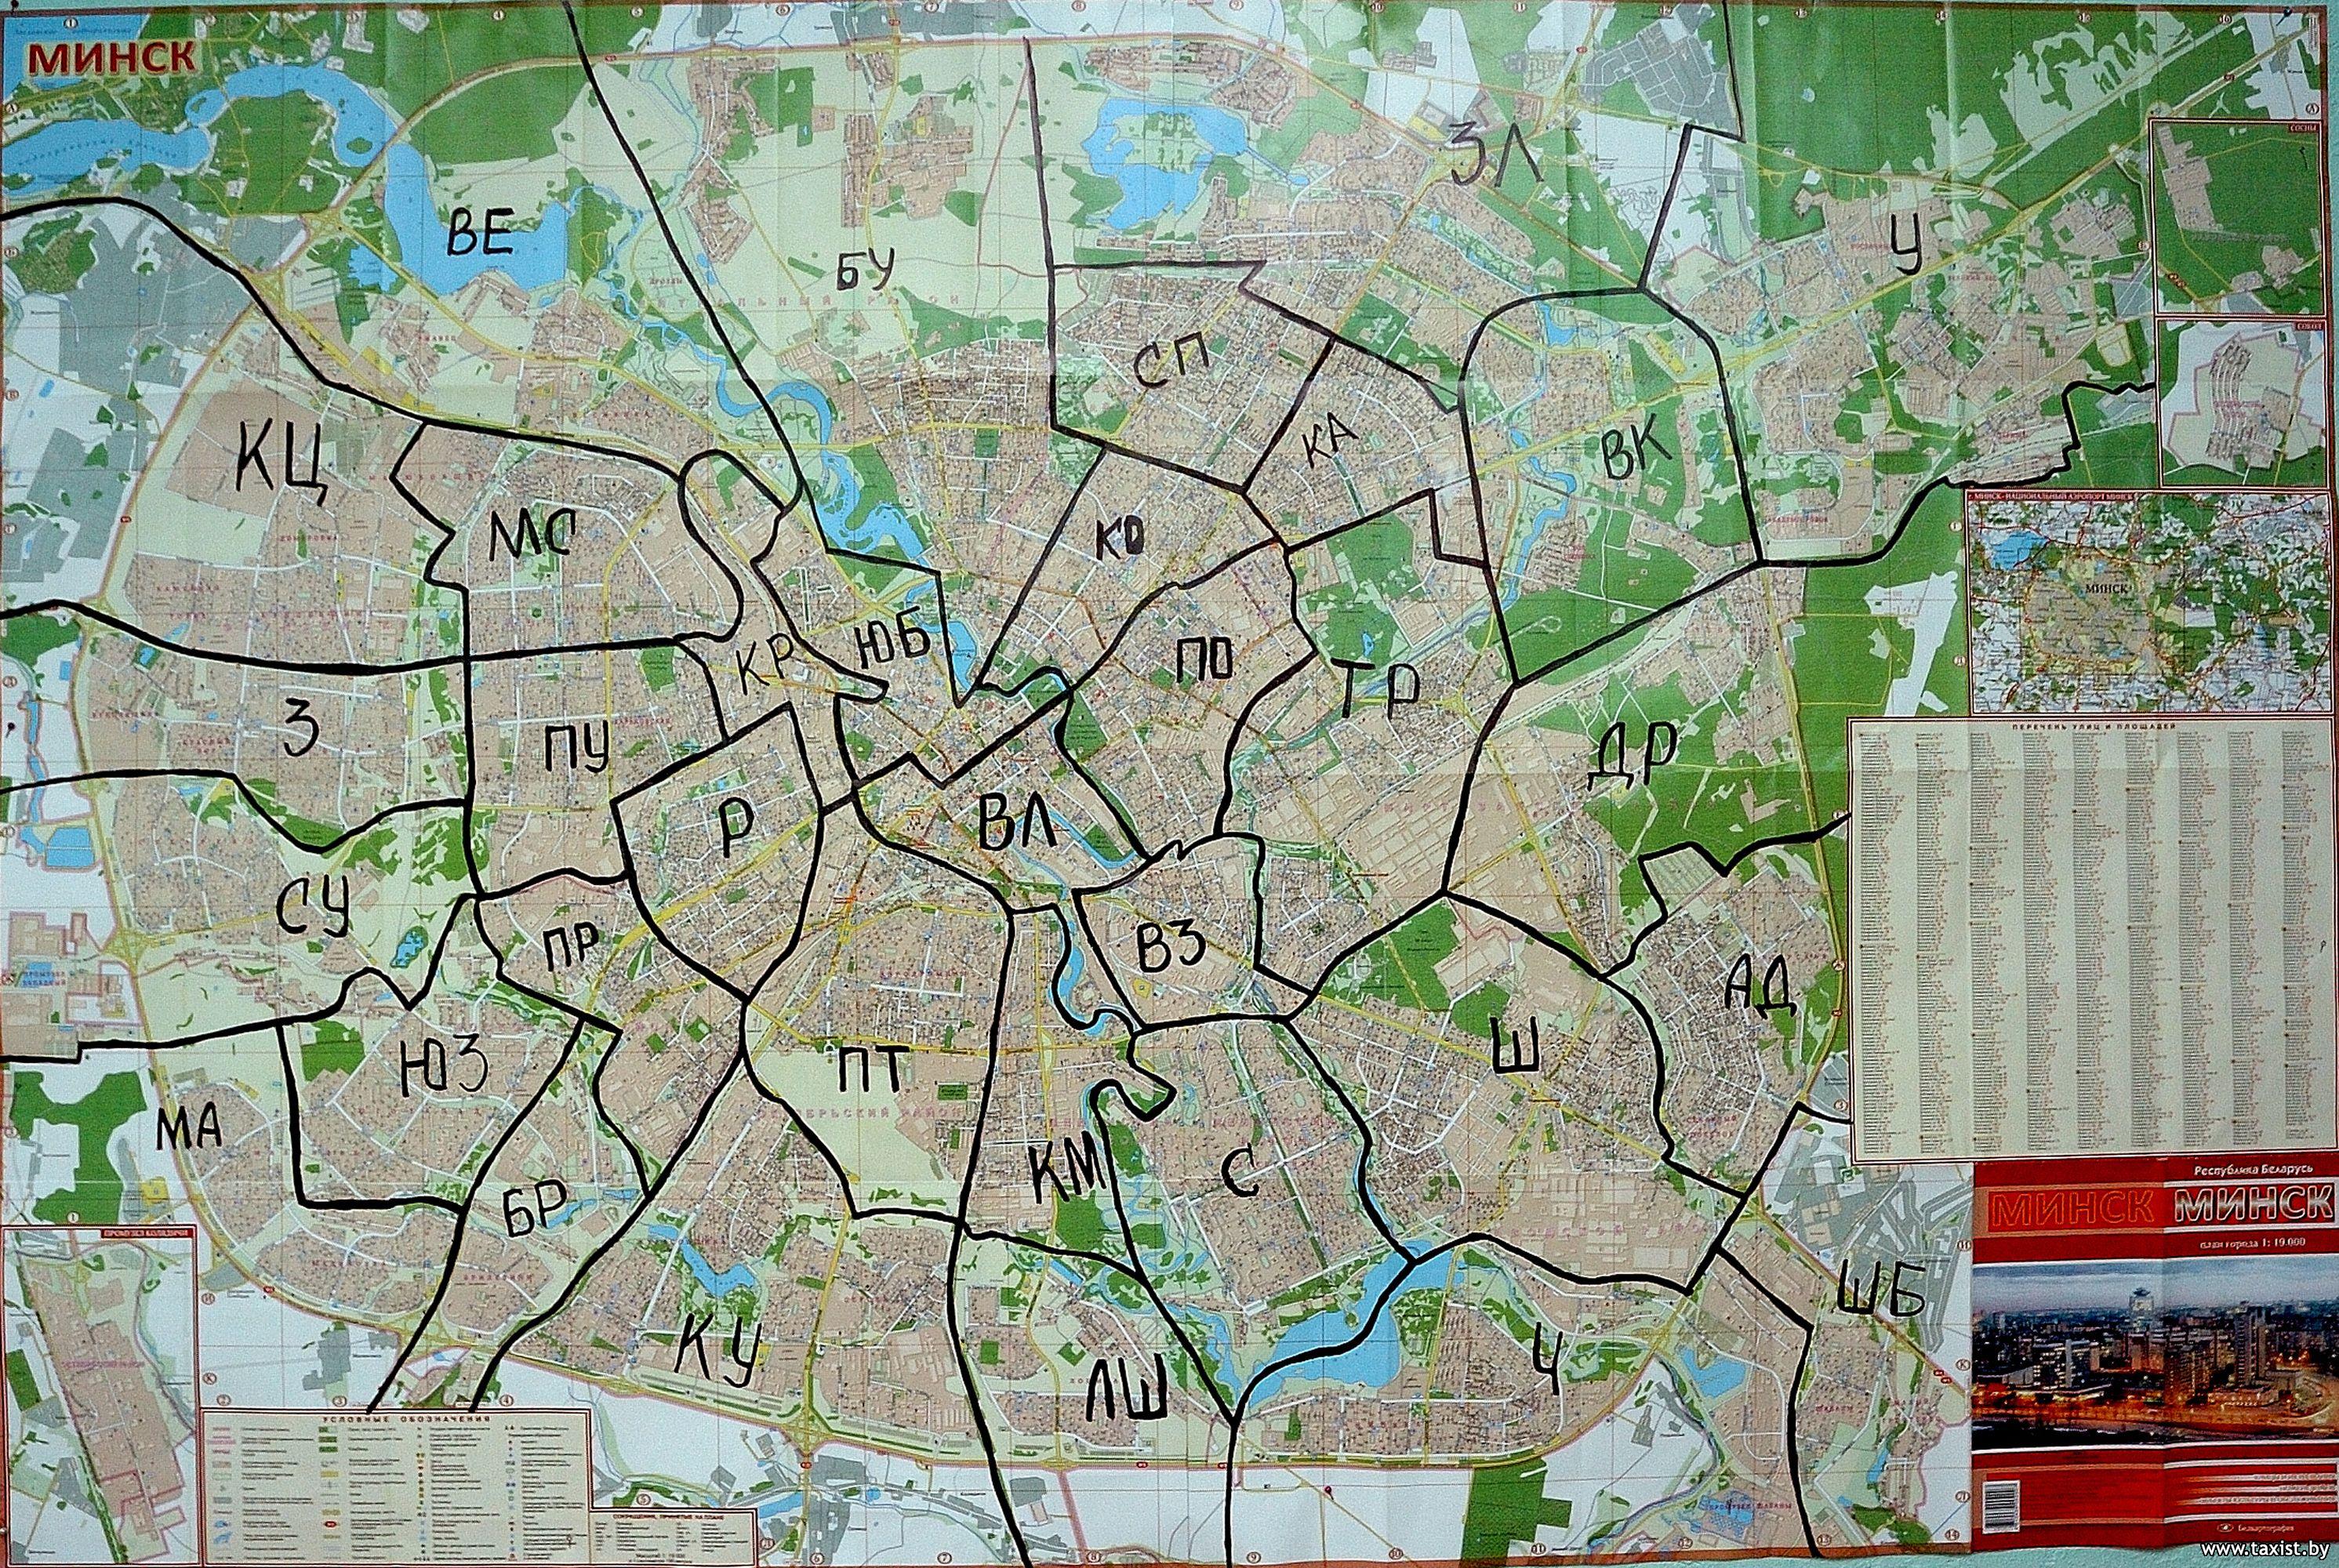 Сайт центрального района минска. Минск на карте. Карта Минска по районам.